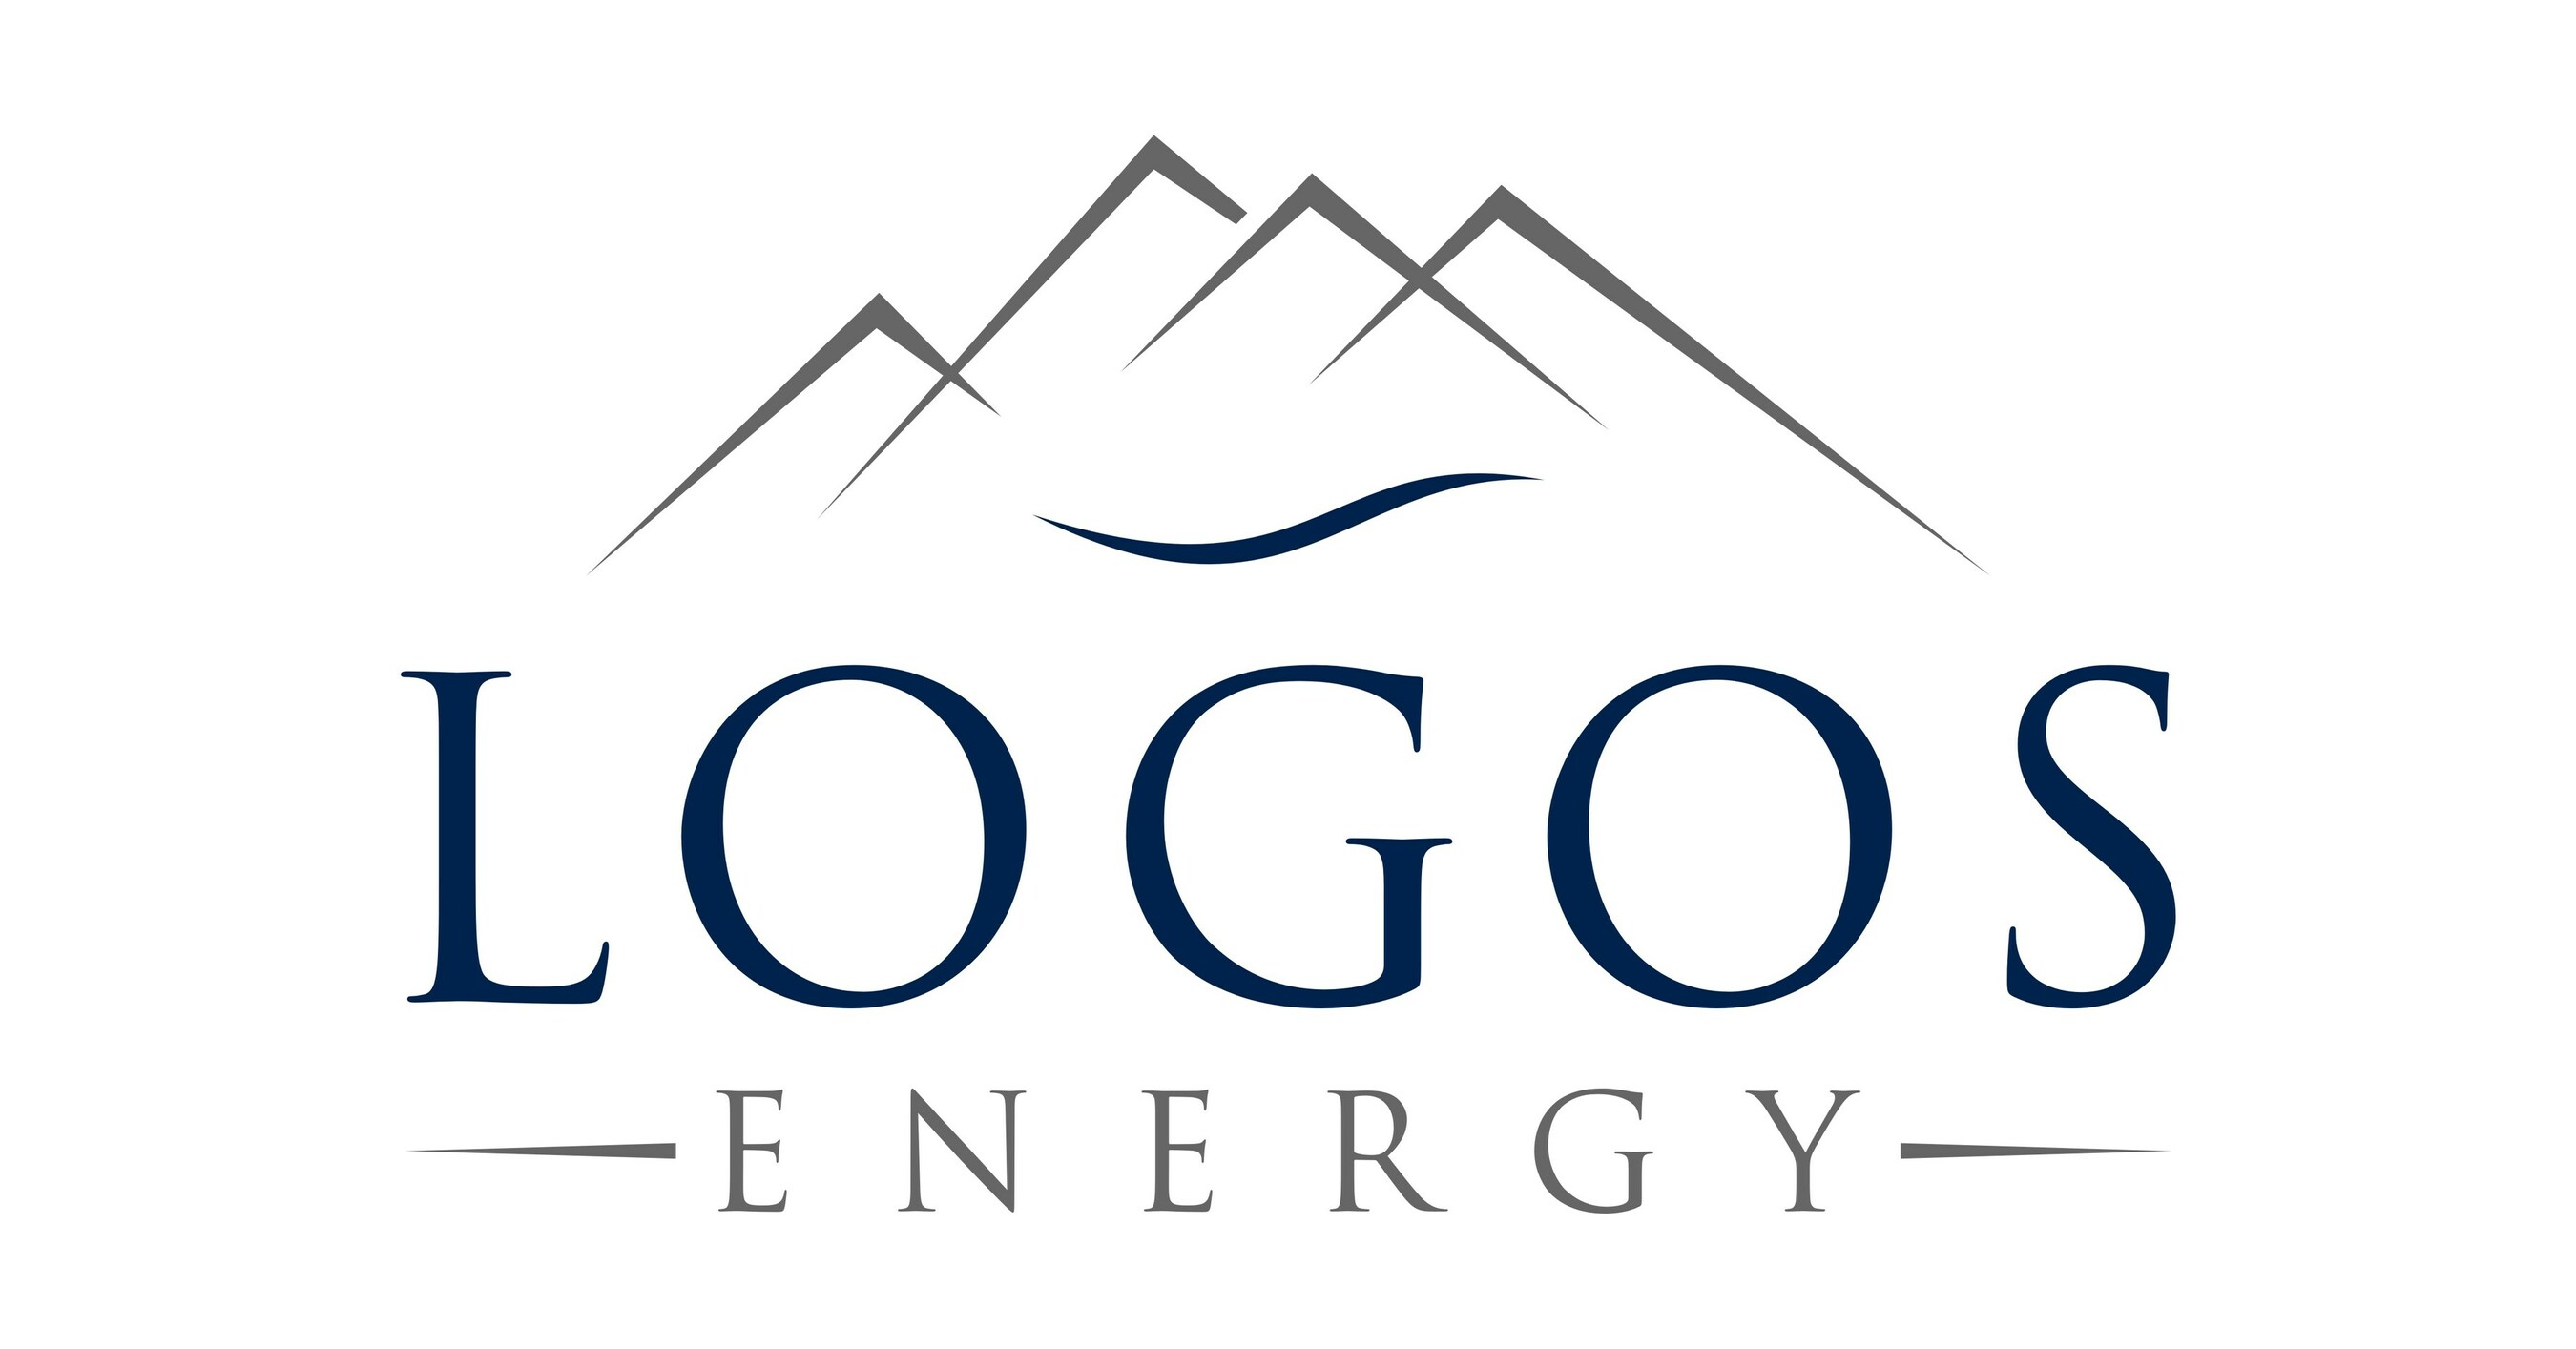 energy company logo